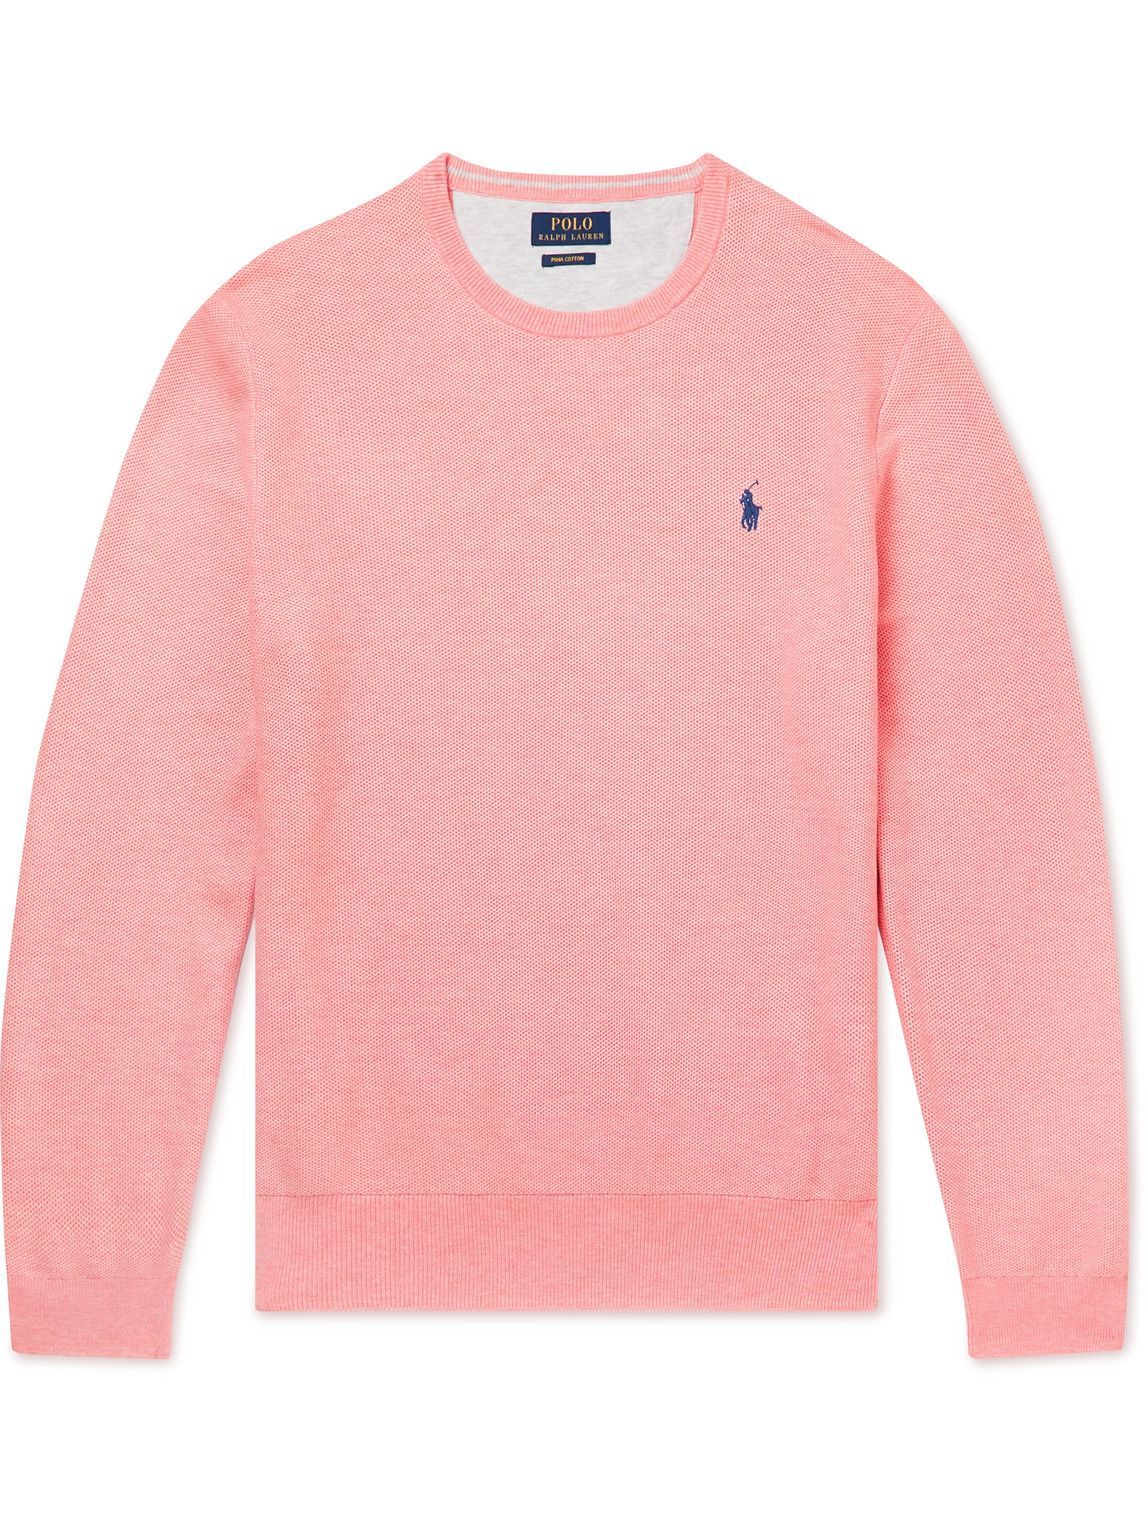 Photo: Polo Ralph Lauren - Honeycomb-Knit Pima Cotton Sweater - Pink